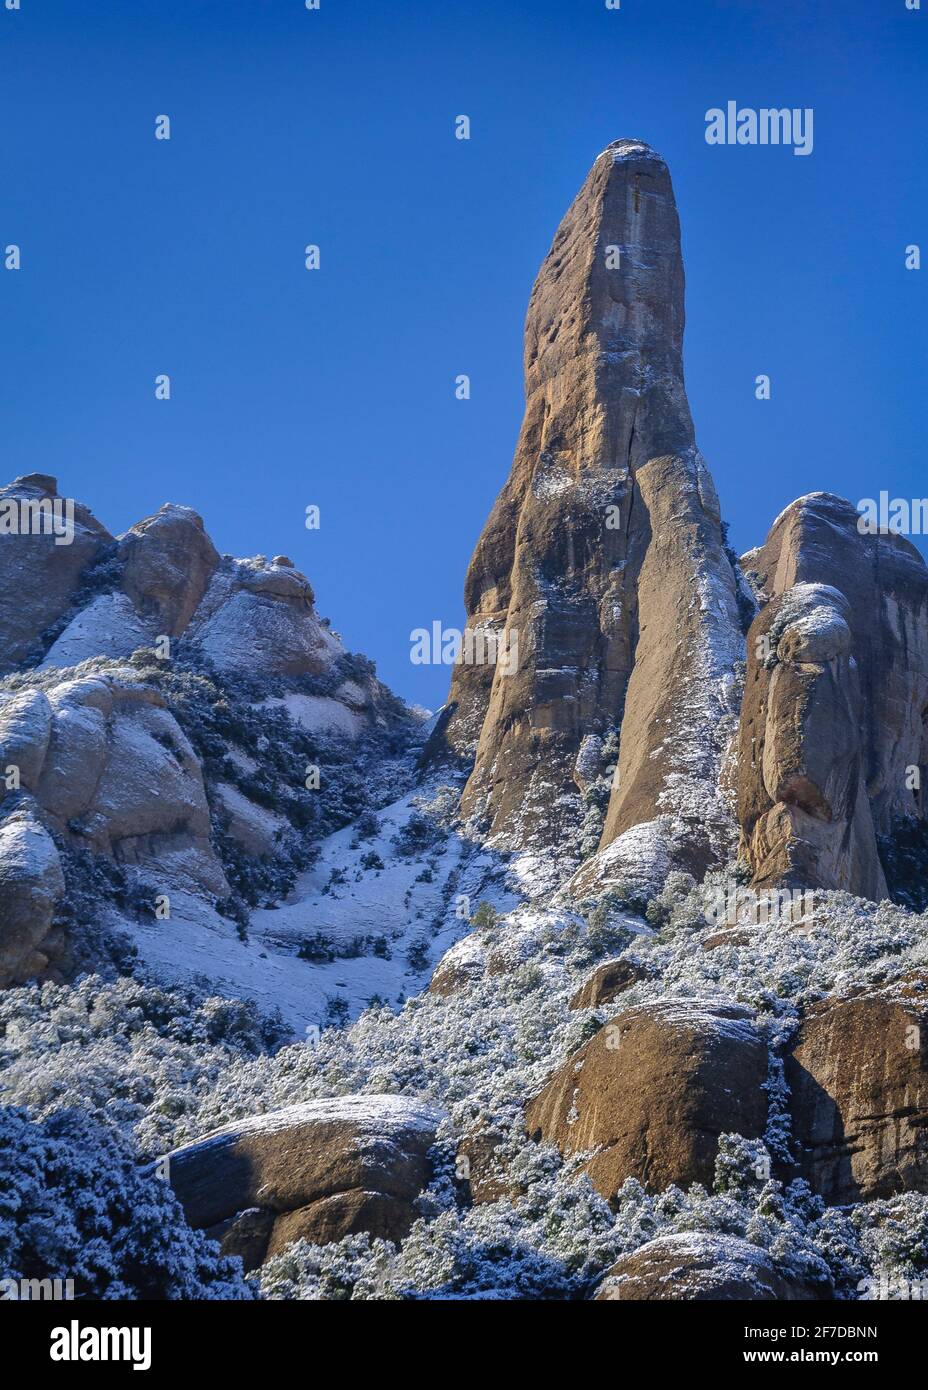 Cavall Bernat rock spire in Montserrat after a snowfall in winter (Barcelona province, Catalonia, Spain) ESP: Cavall Bernat de Montserrat nevado Stock Photo